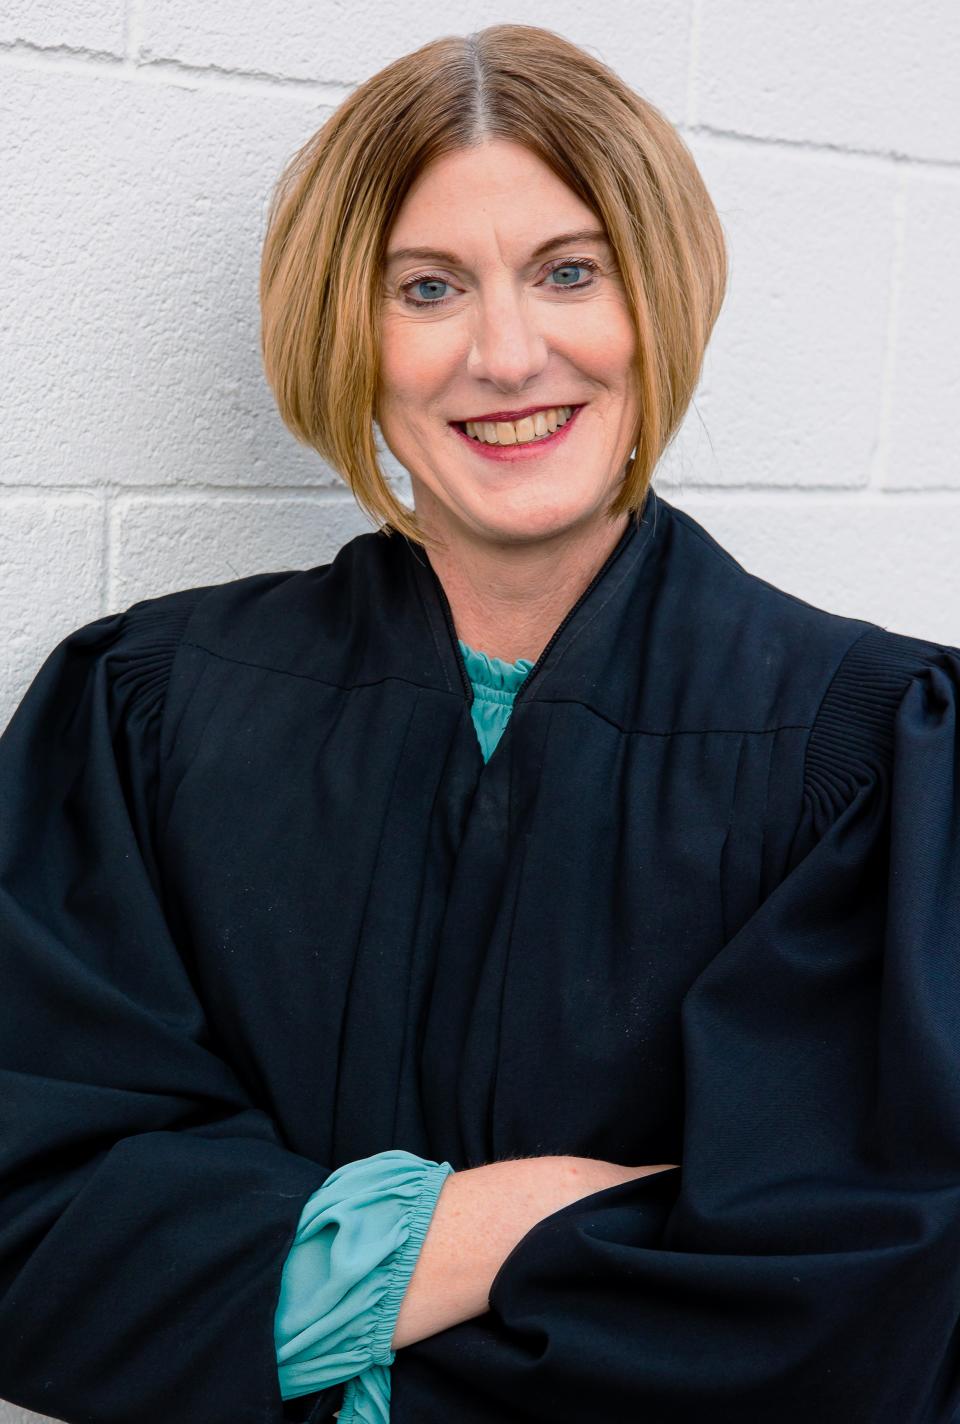 Judge Rhonda Burggraf